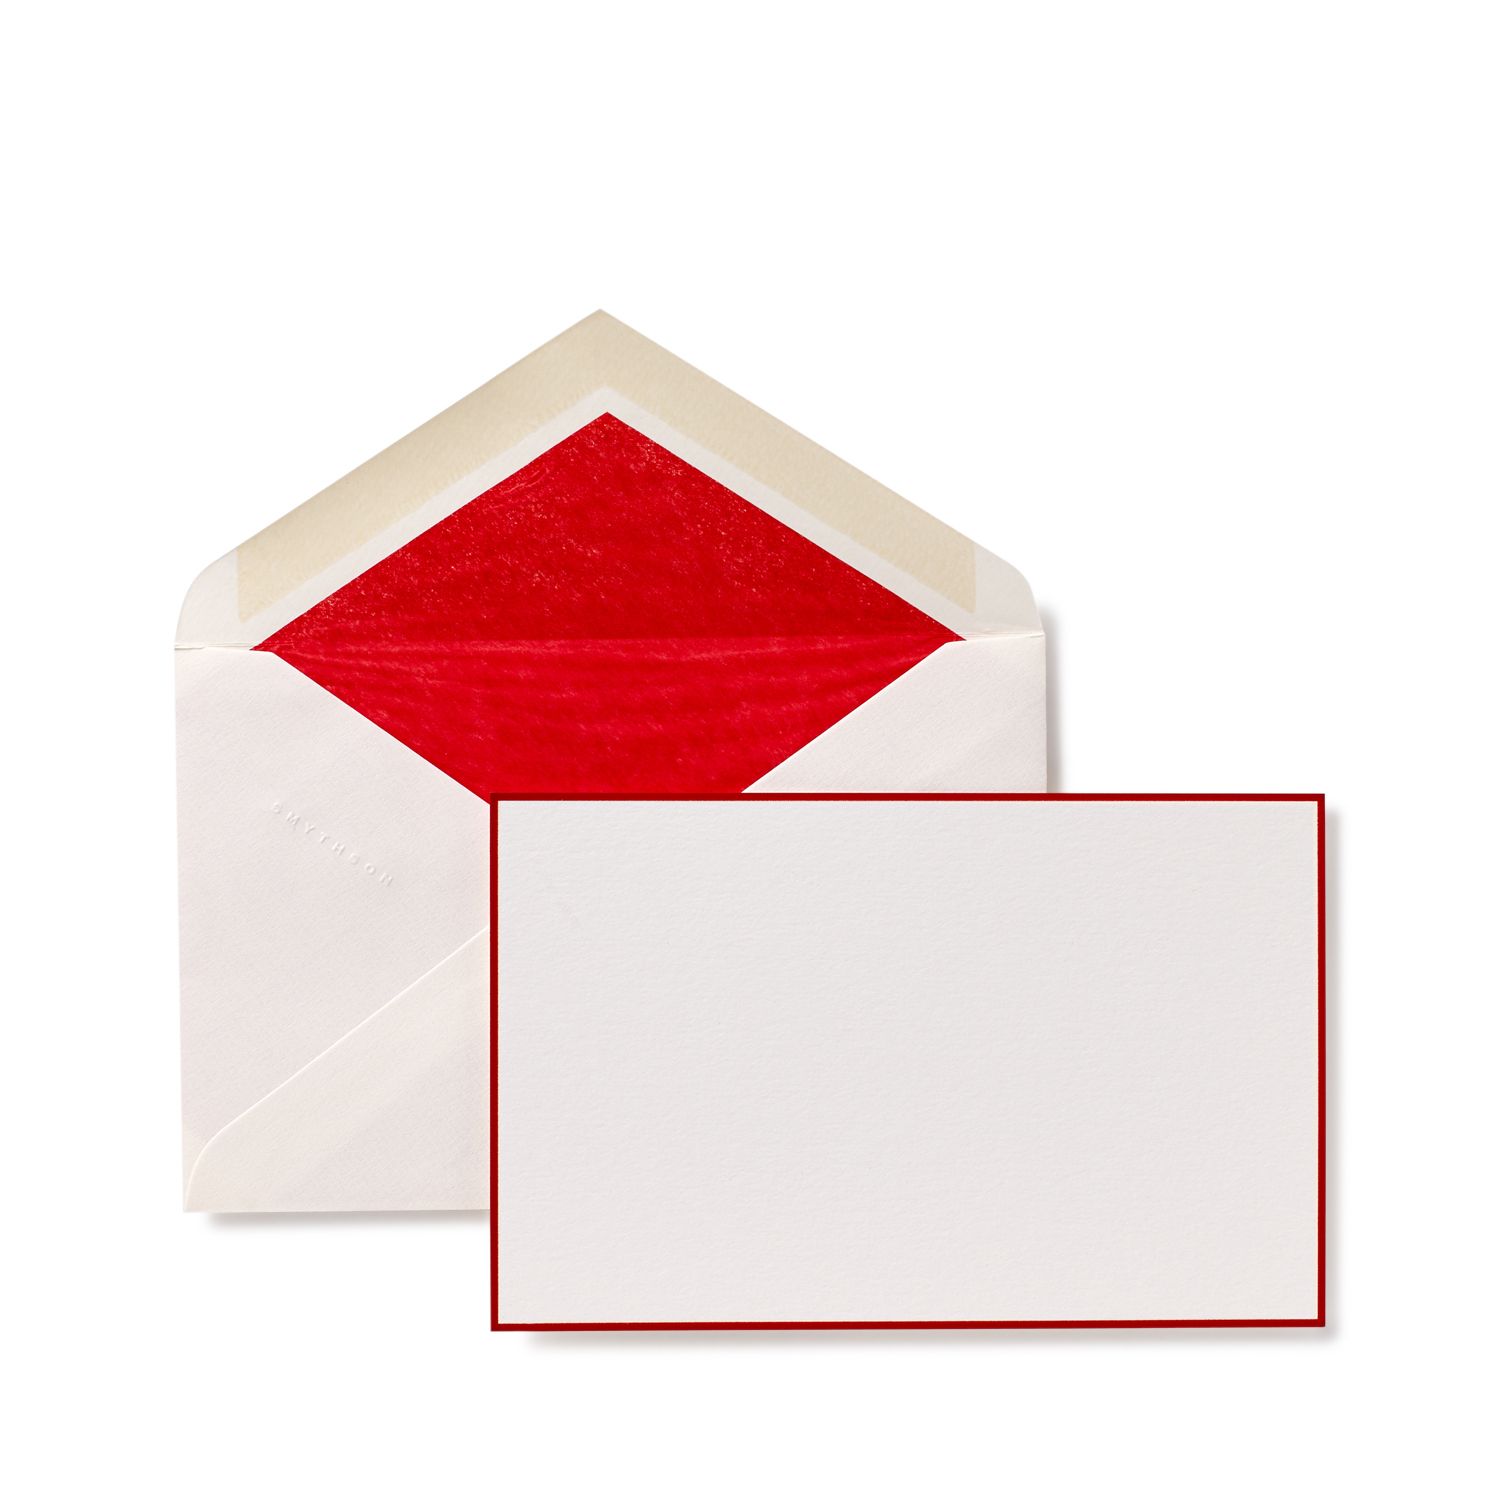 Bordered Correspondence Cards in poinsettia red | Smythson | Smythson